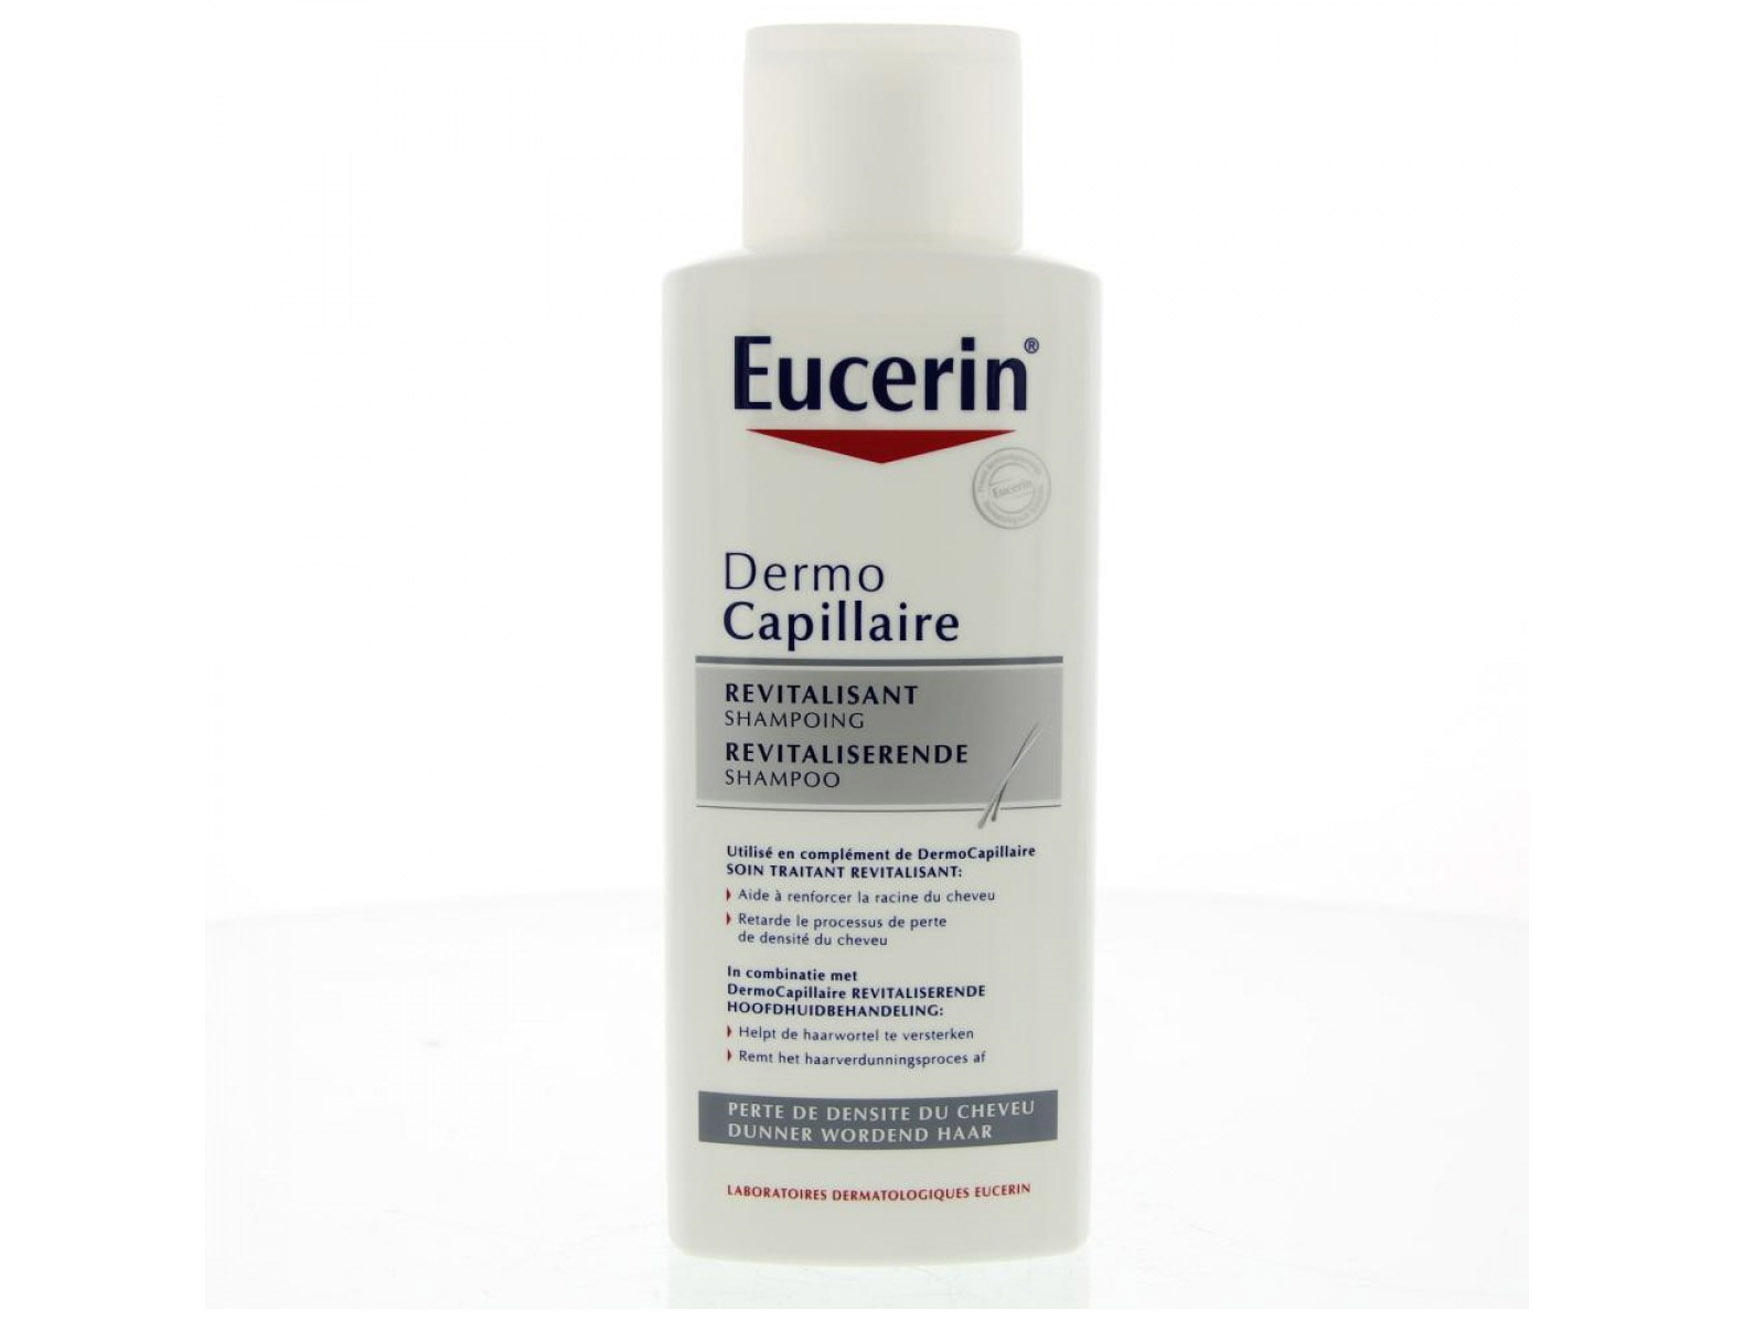 Eucerin revitaliserende shampoo - 200 ml - 1 st